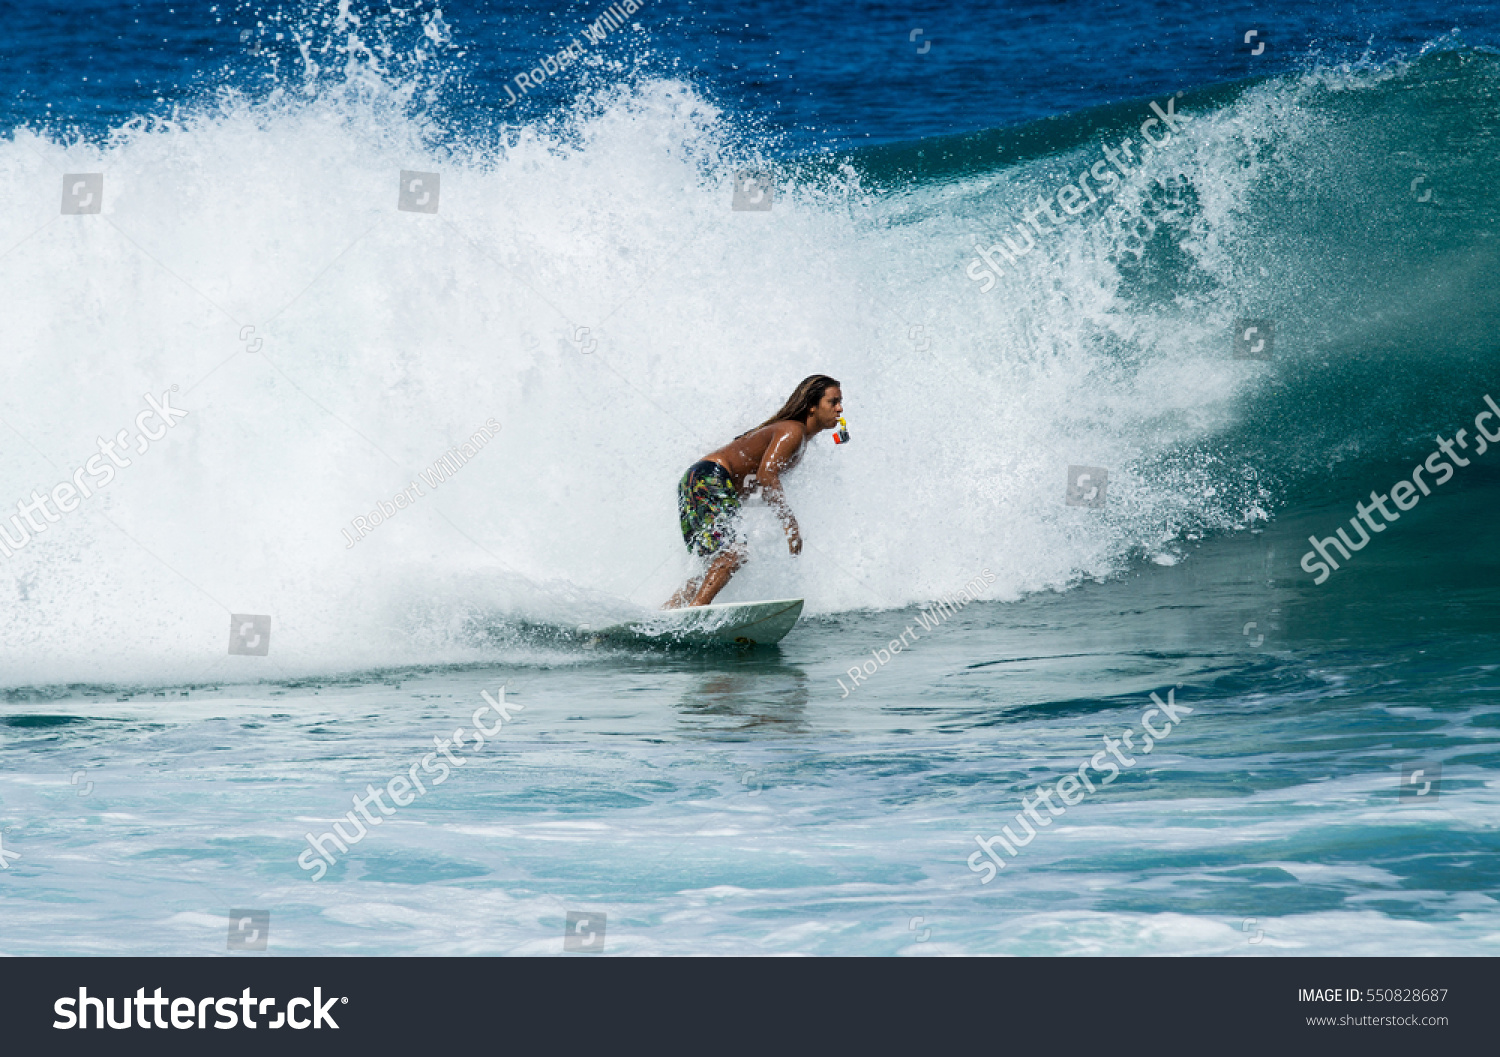 September 6, 2016 - Banzia Pipeline Oahu Hawaii. A surfer rides waves on Oahu's famous surf. #550828687